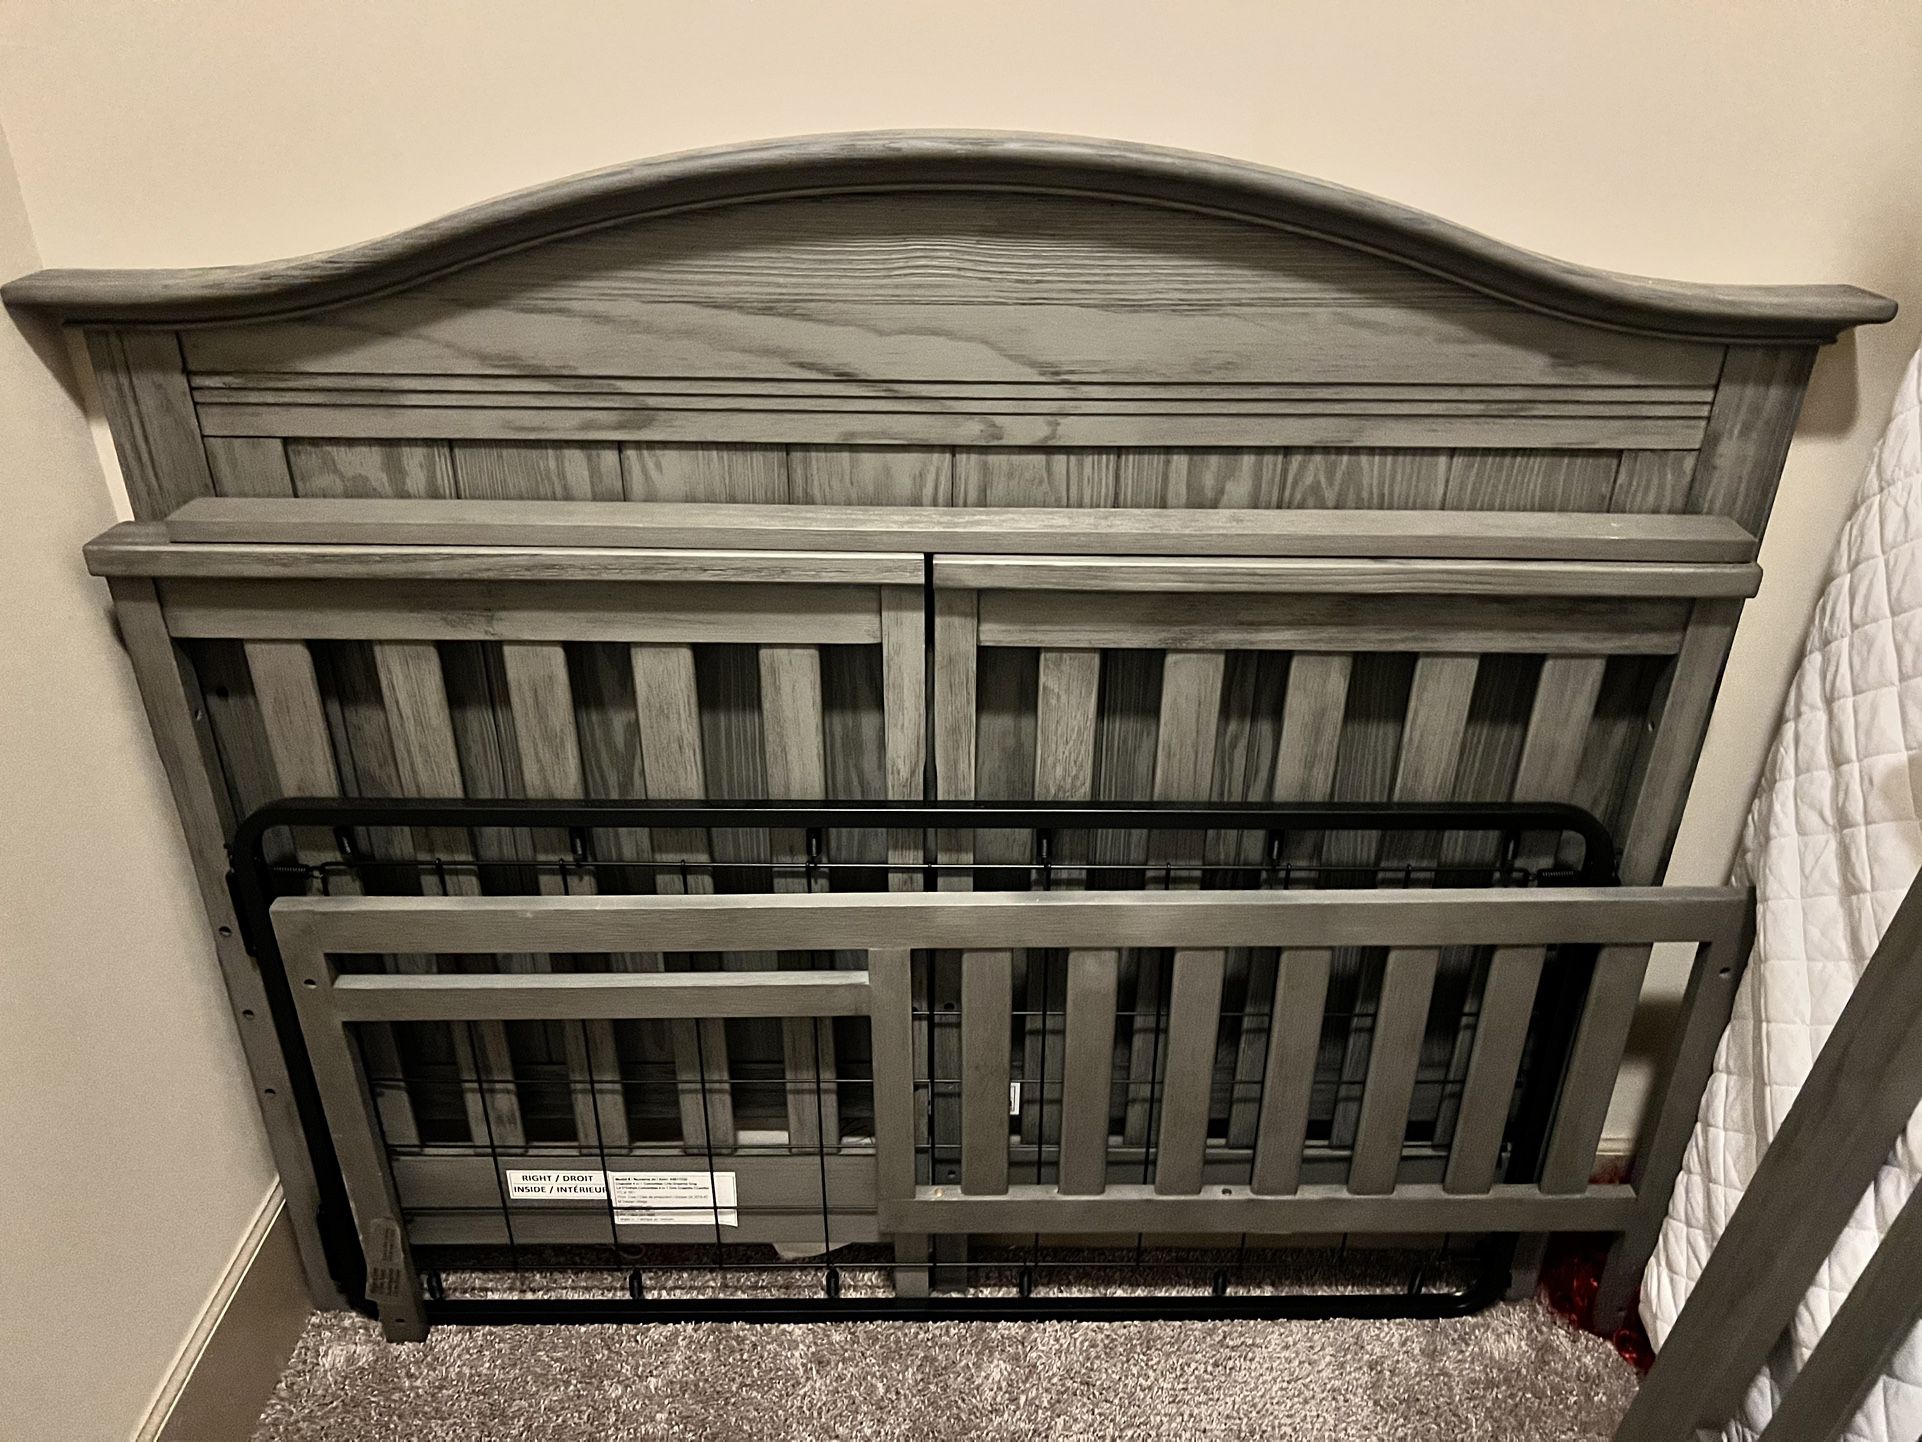 Gray Crib